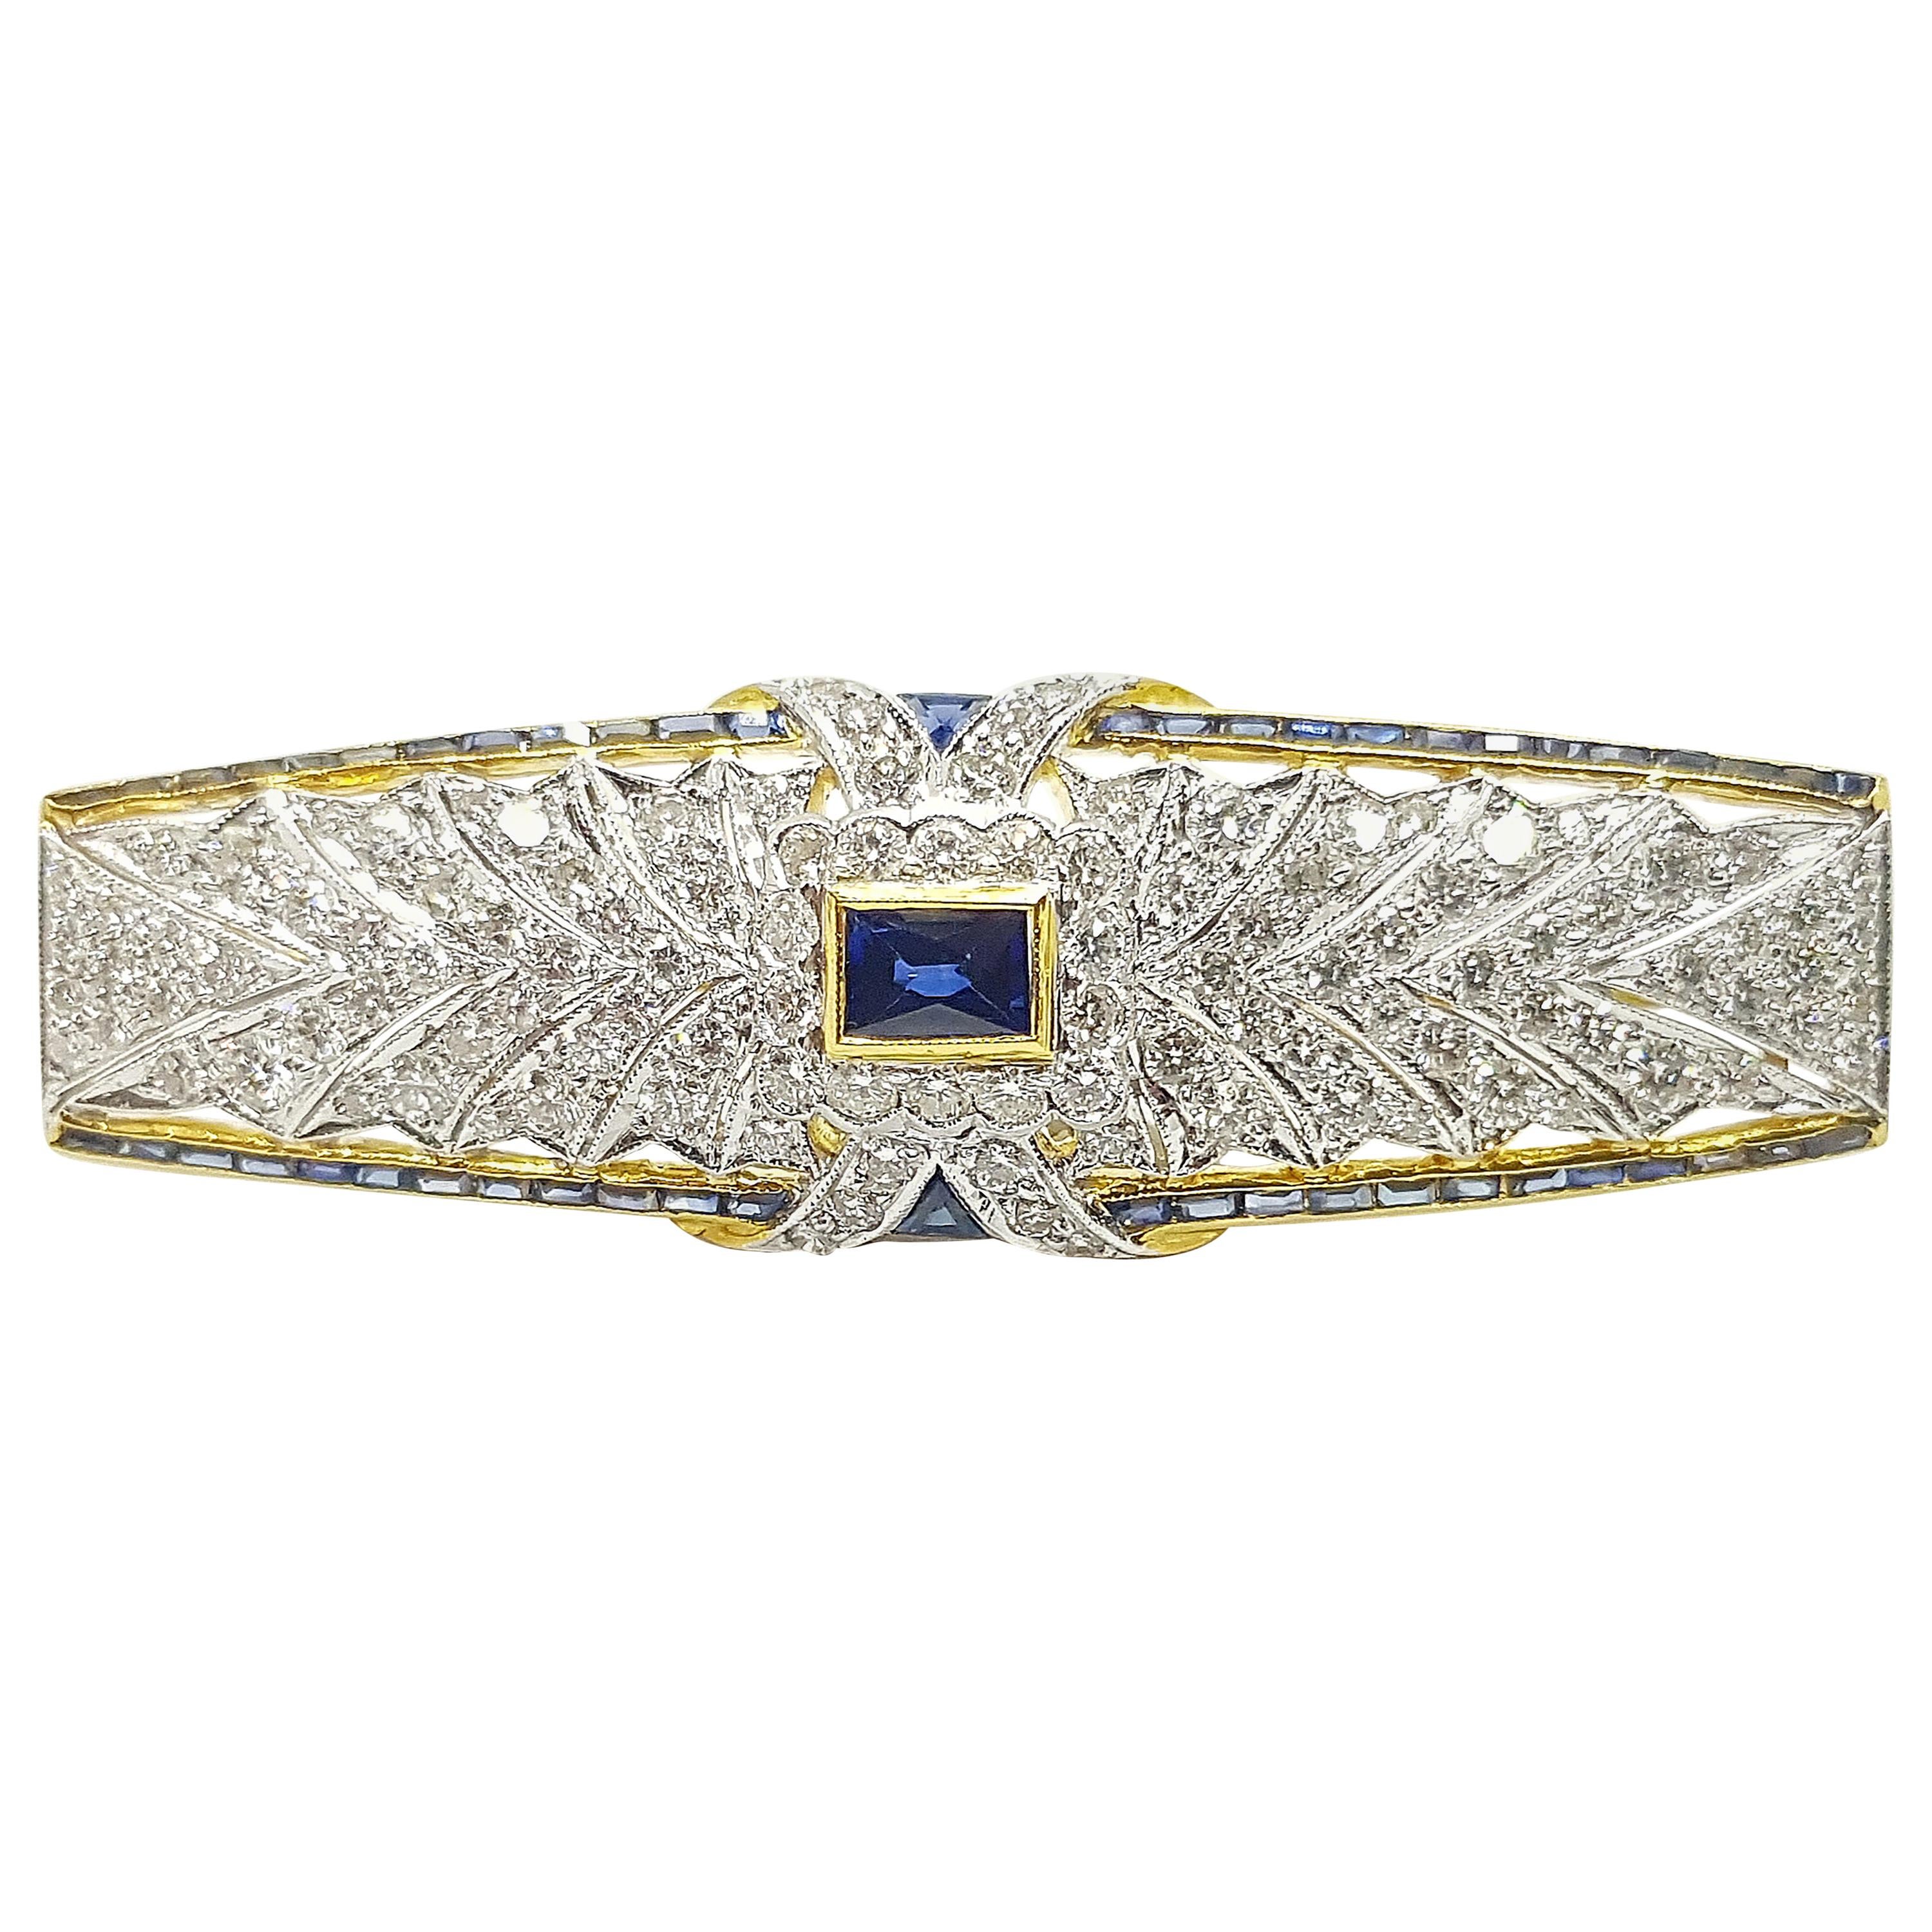 Blue Sapphire with Diamond Brooch Set in 18 Karat Gold Settings